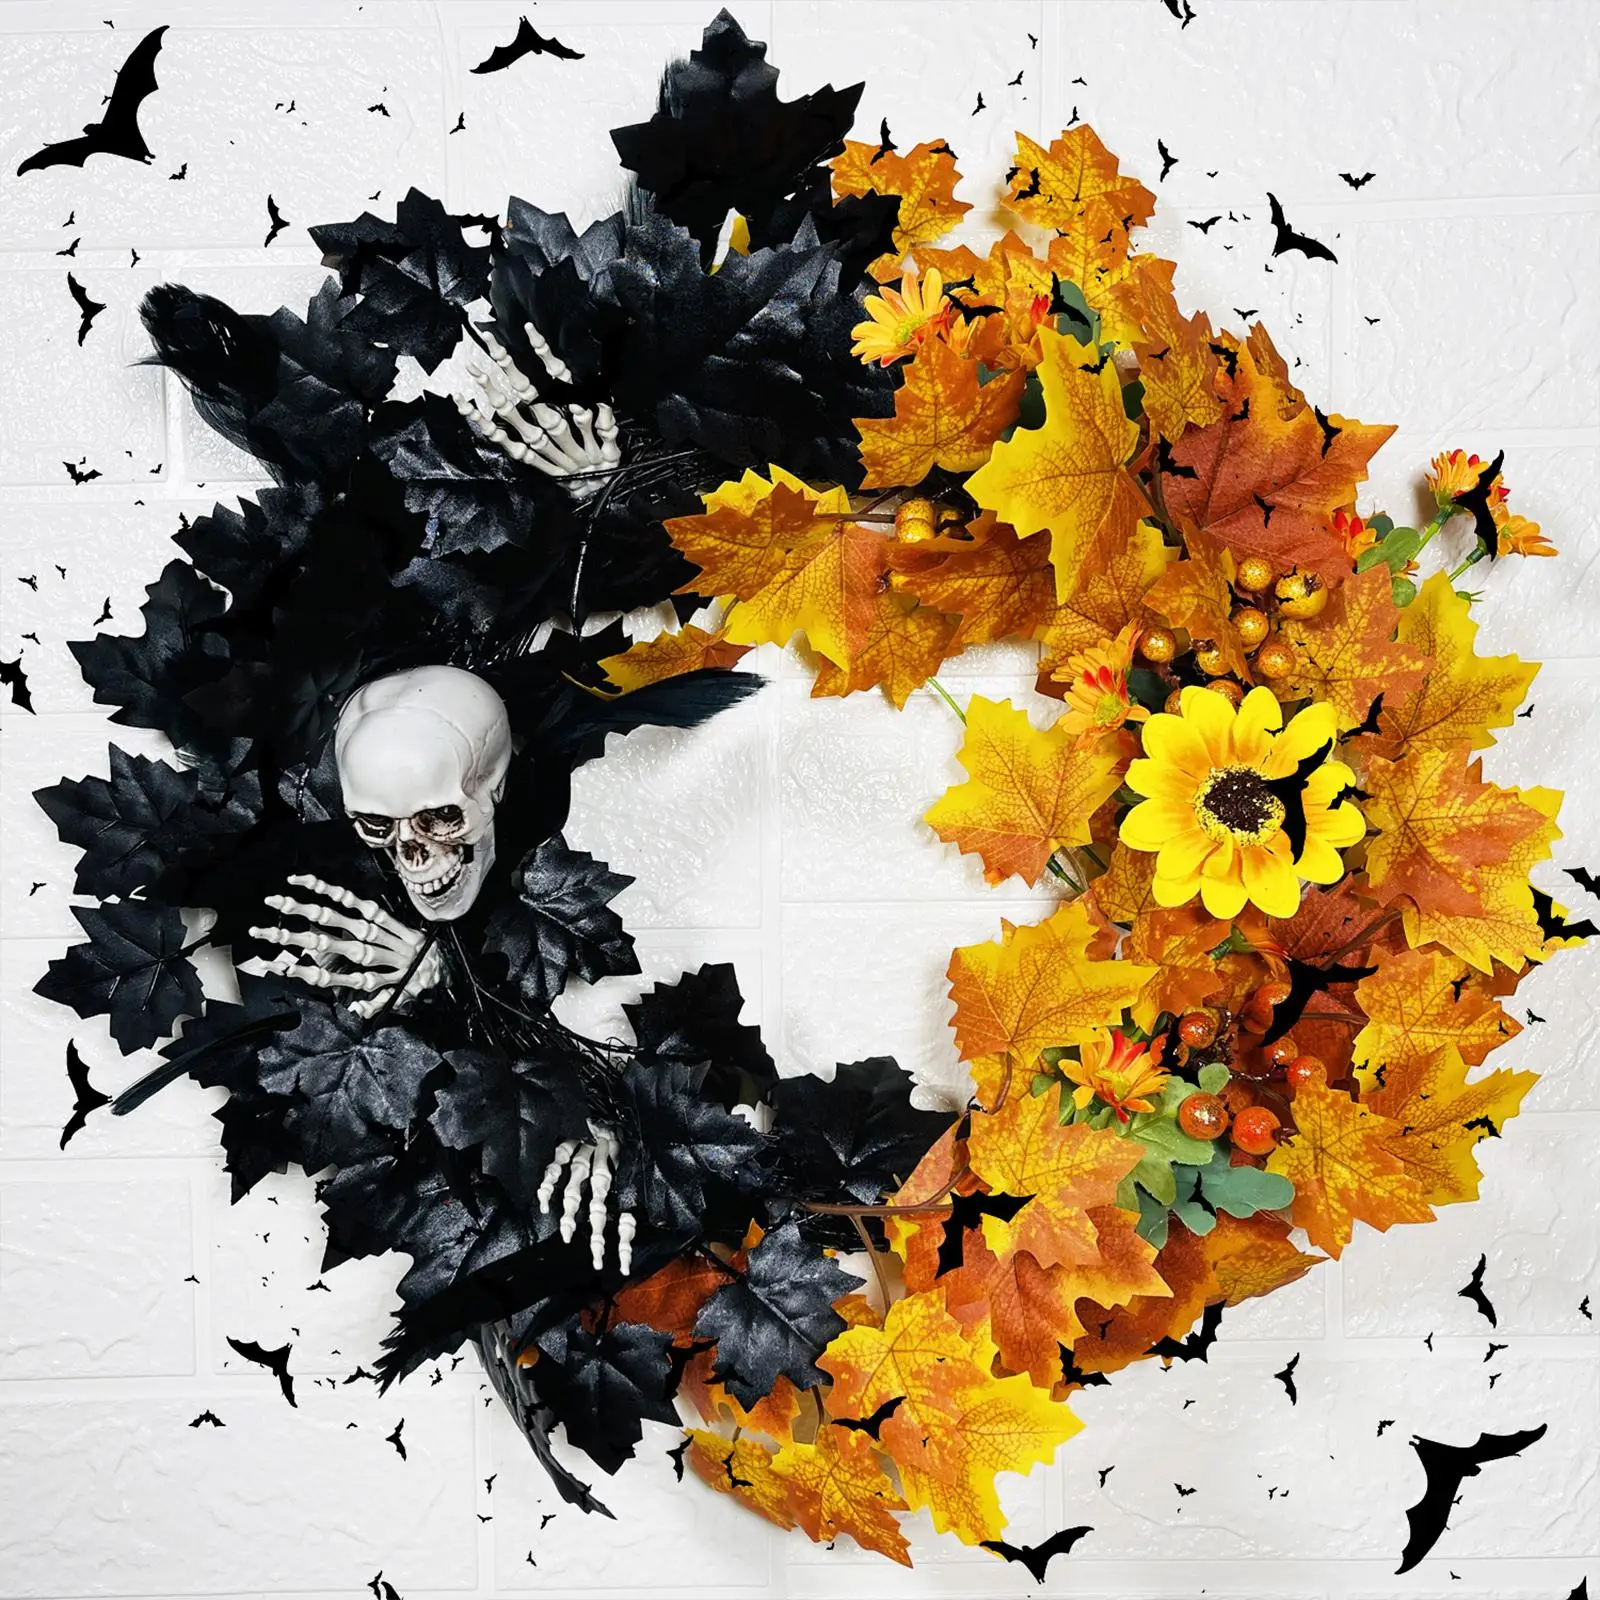 Halloween Fall Wreath Artificial Garland 45cm Premium Material Celebrate Festival Decor